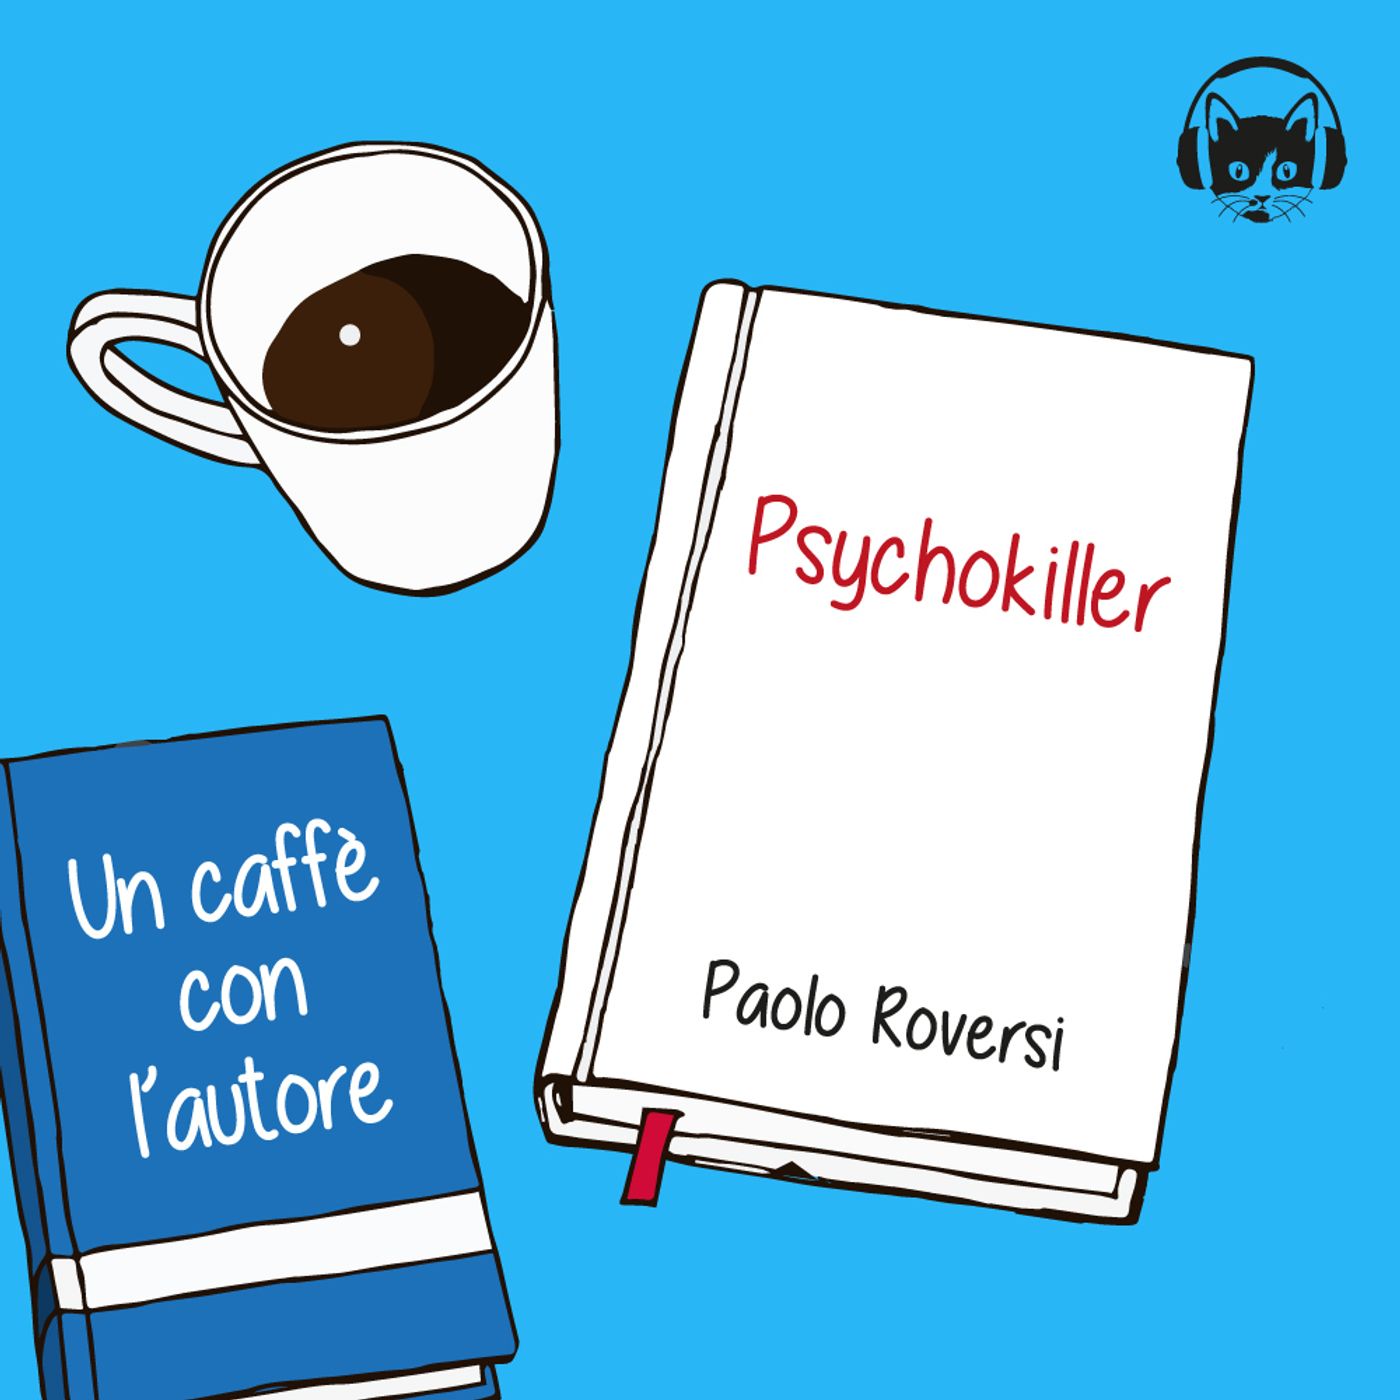 01. Psychokiller, Paolo Roversi